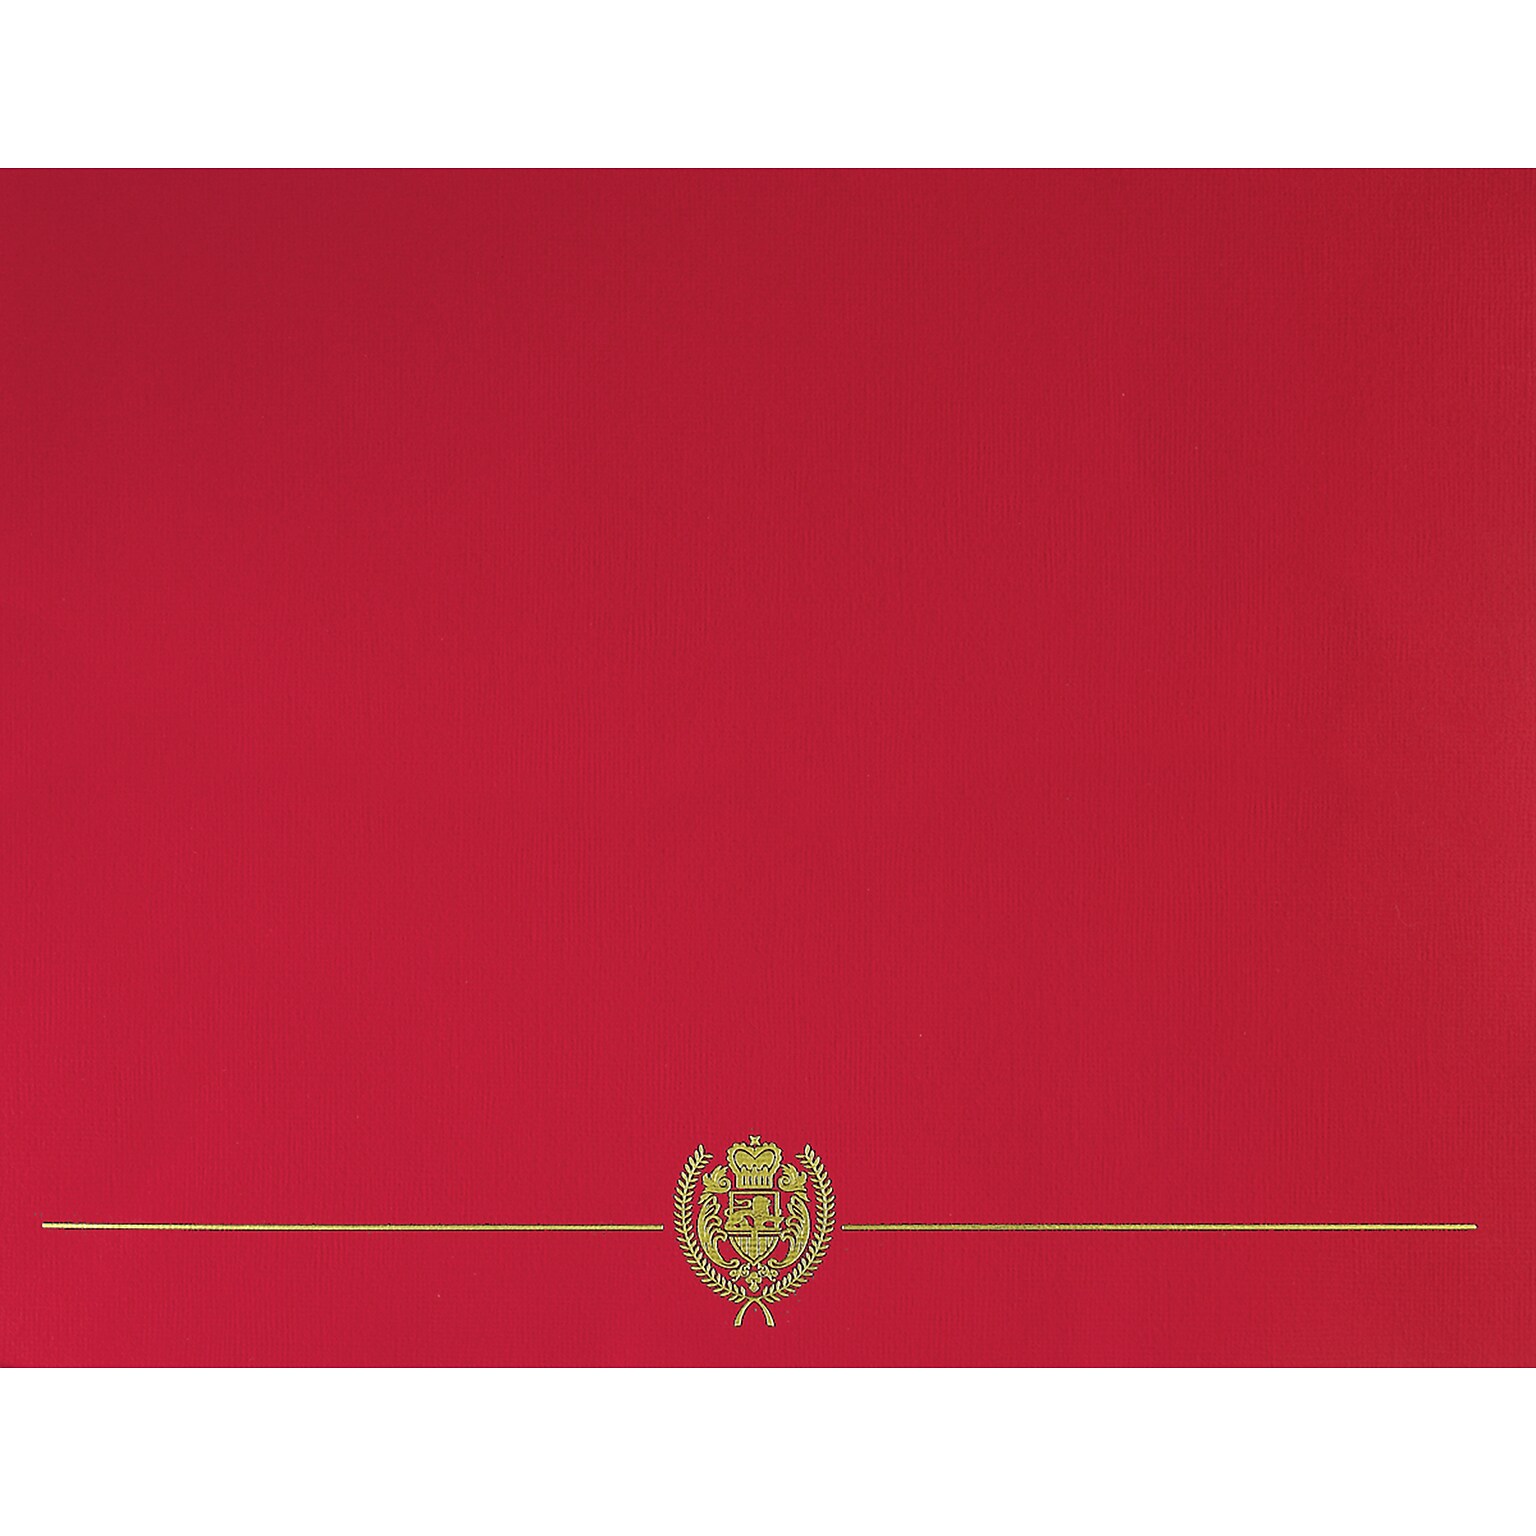 Masterpiece Studios Certificate Holders, 9.375 x 12, Red, 5/Pack (903031)